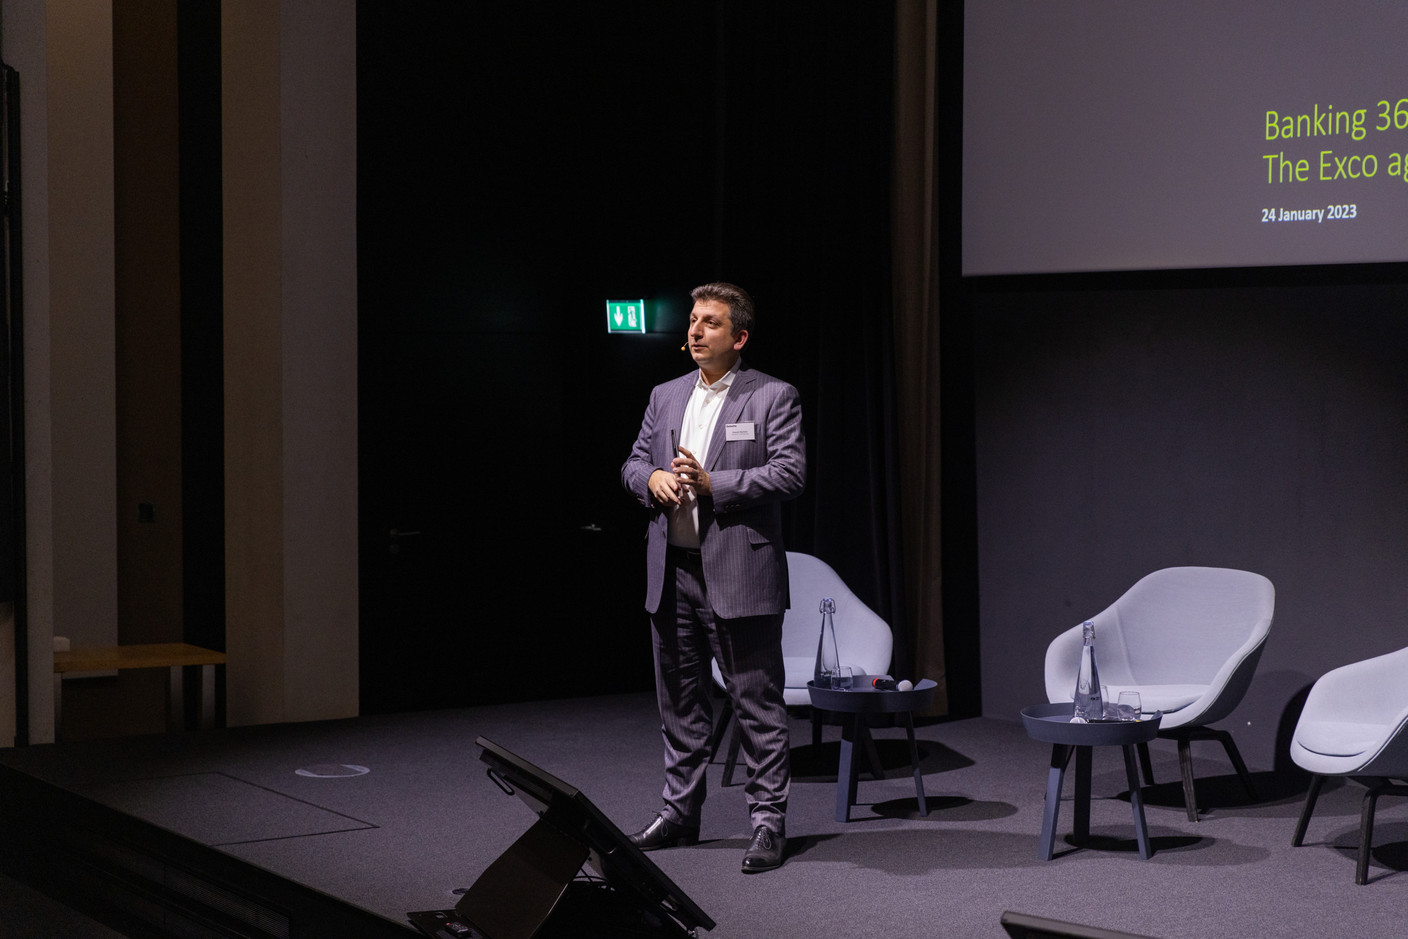 Pascal Martino, partner at Deloitte Luxembourg, speaking at Deloitte Luxembourg's Banking 360 conference on 24 January 2023. Romain Gamba/Maison Moderne